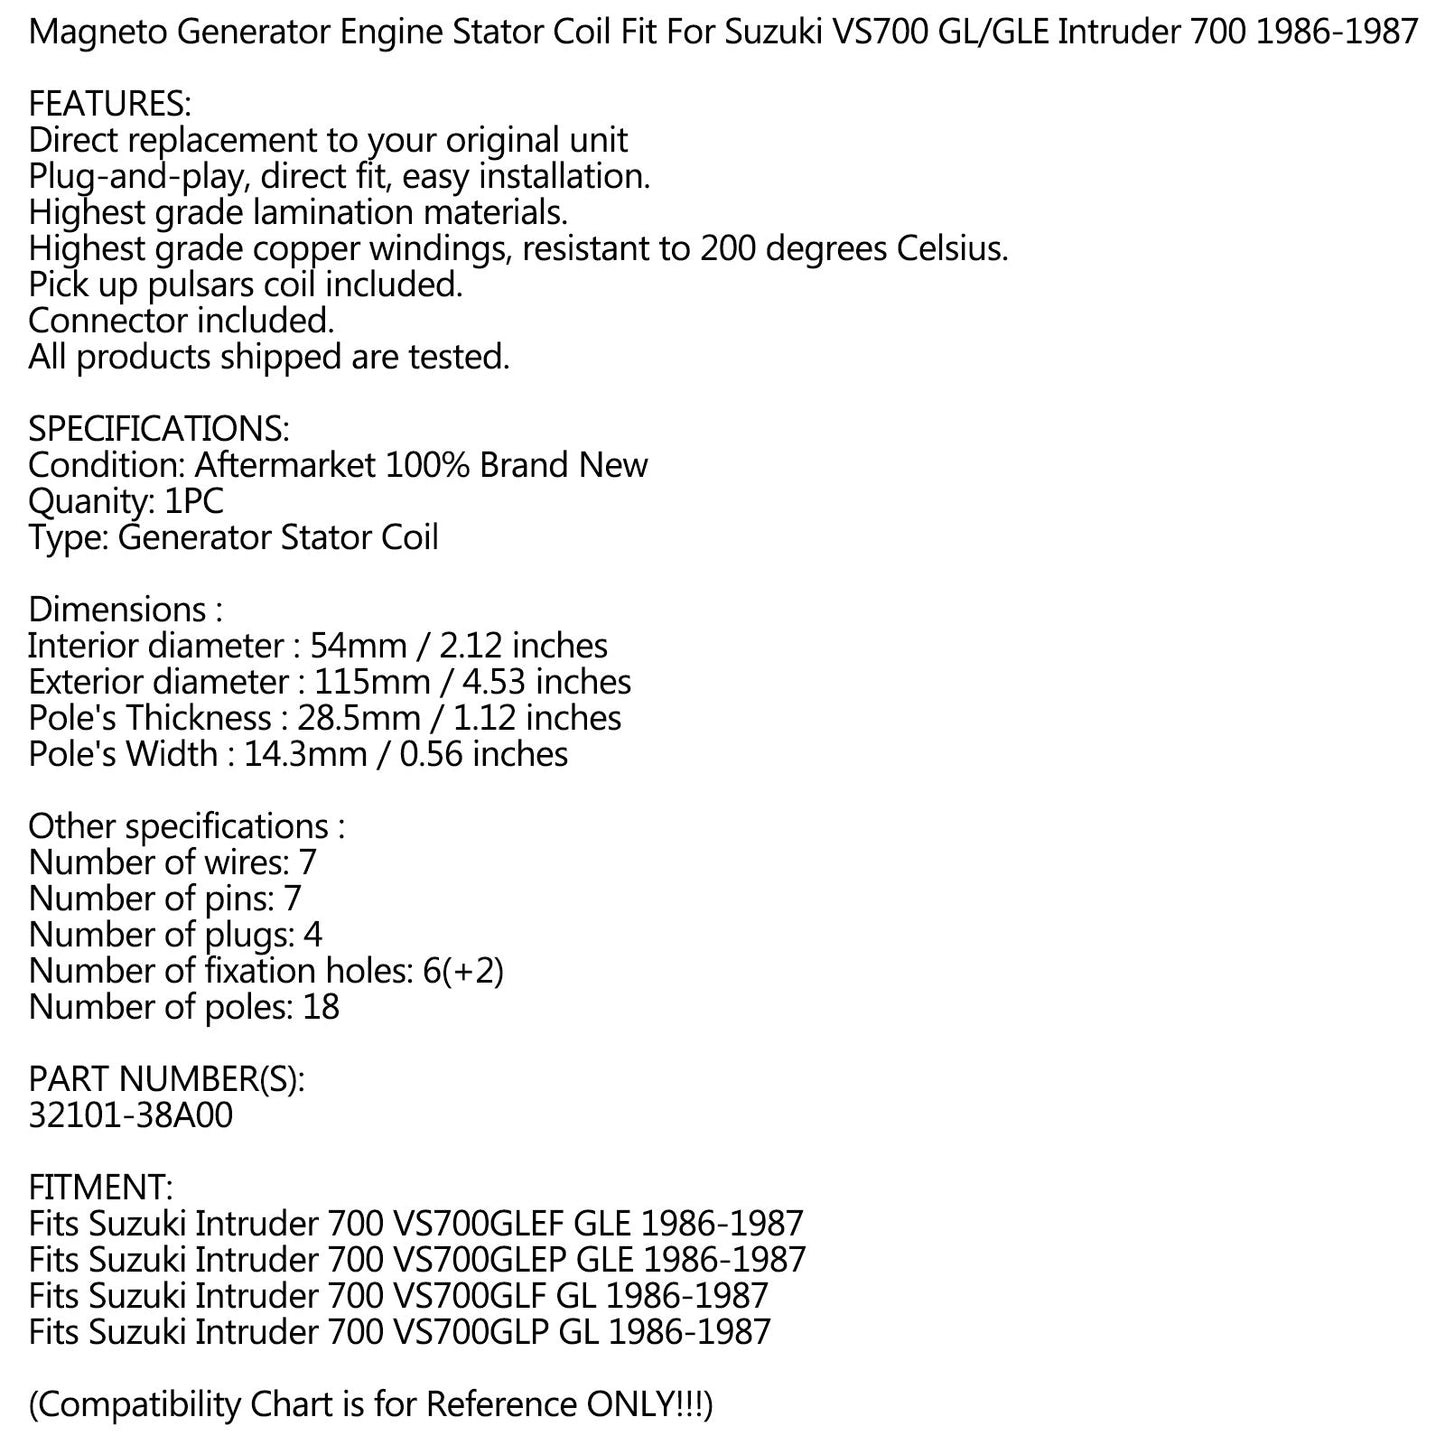 Generator Magneto Stator für Suzuki VS700 vs 700 GL Gle 1 Eindringling 700 86-87 Generic